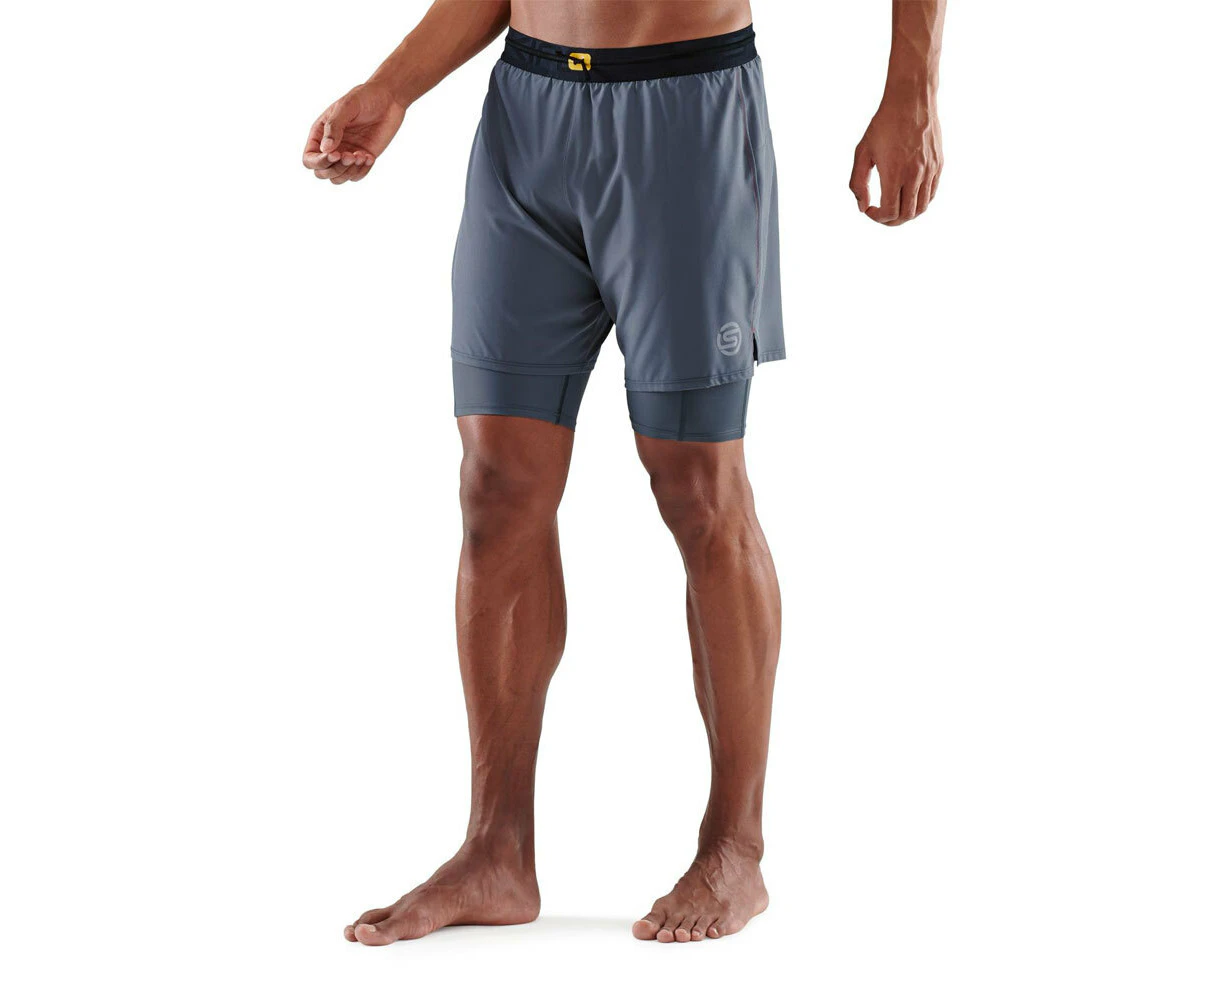 Buy SKINS Compression Series 3 Men's Long Tights Activewear